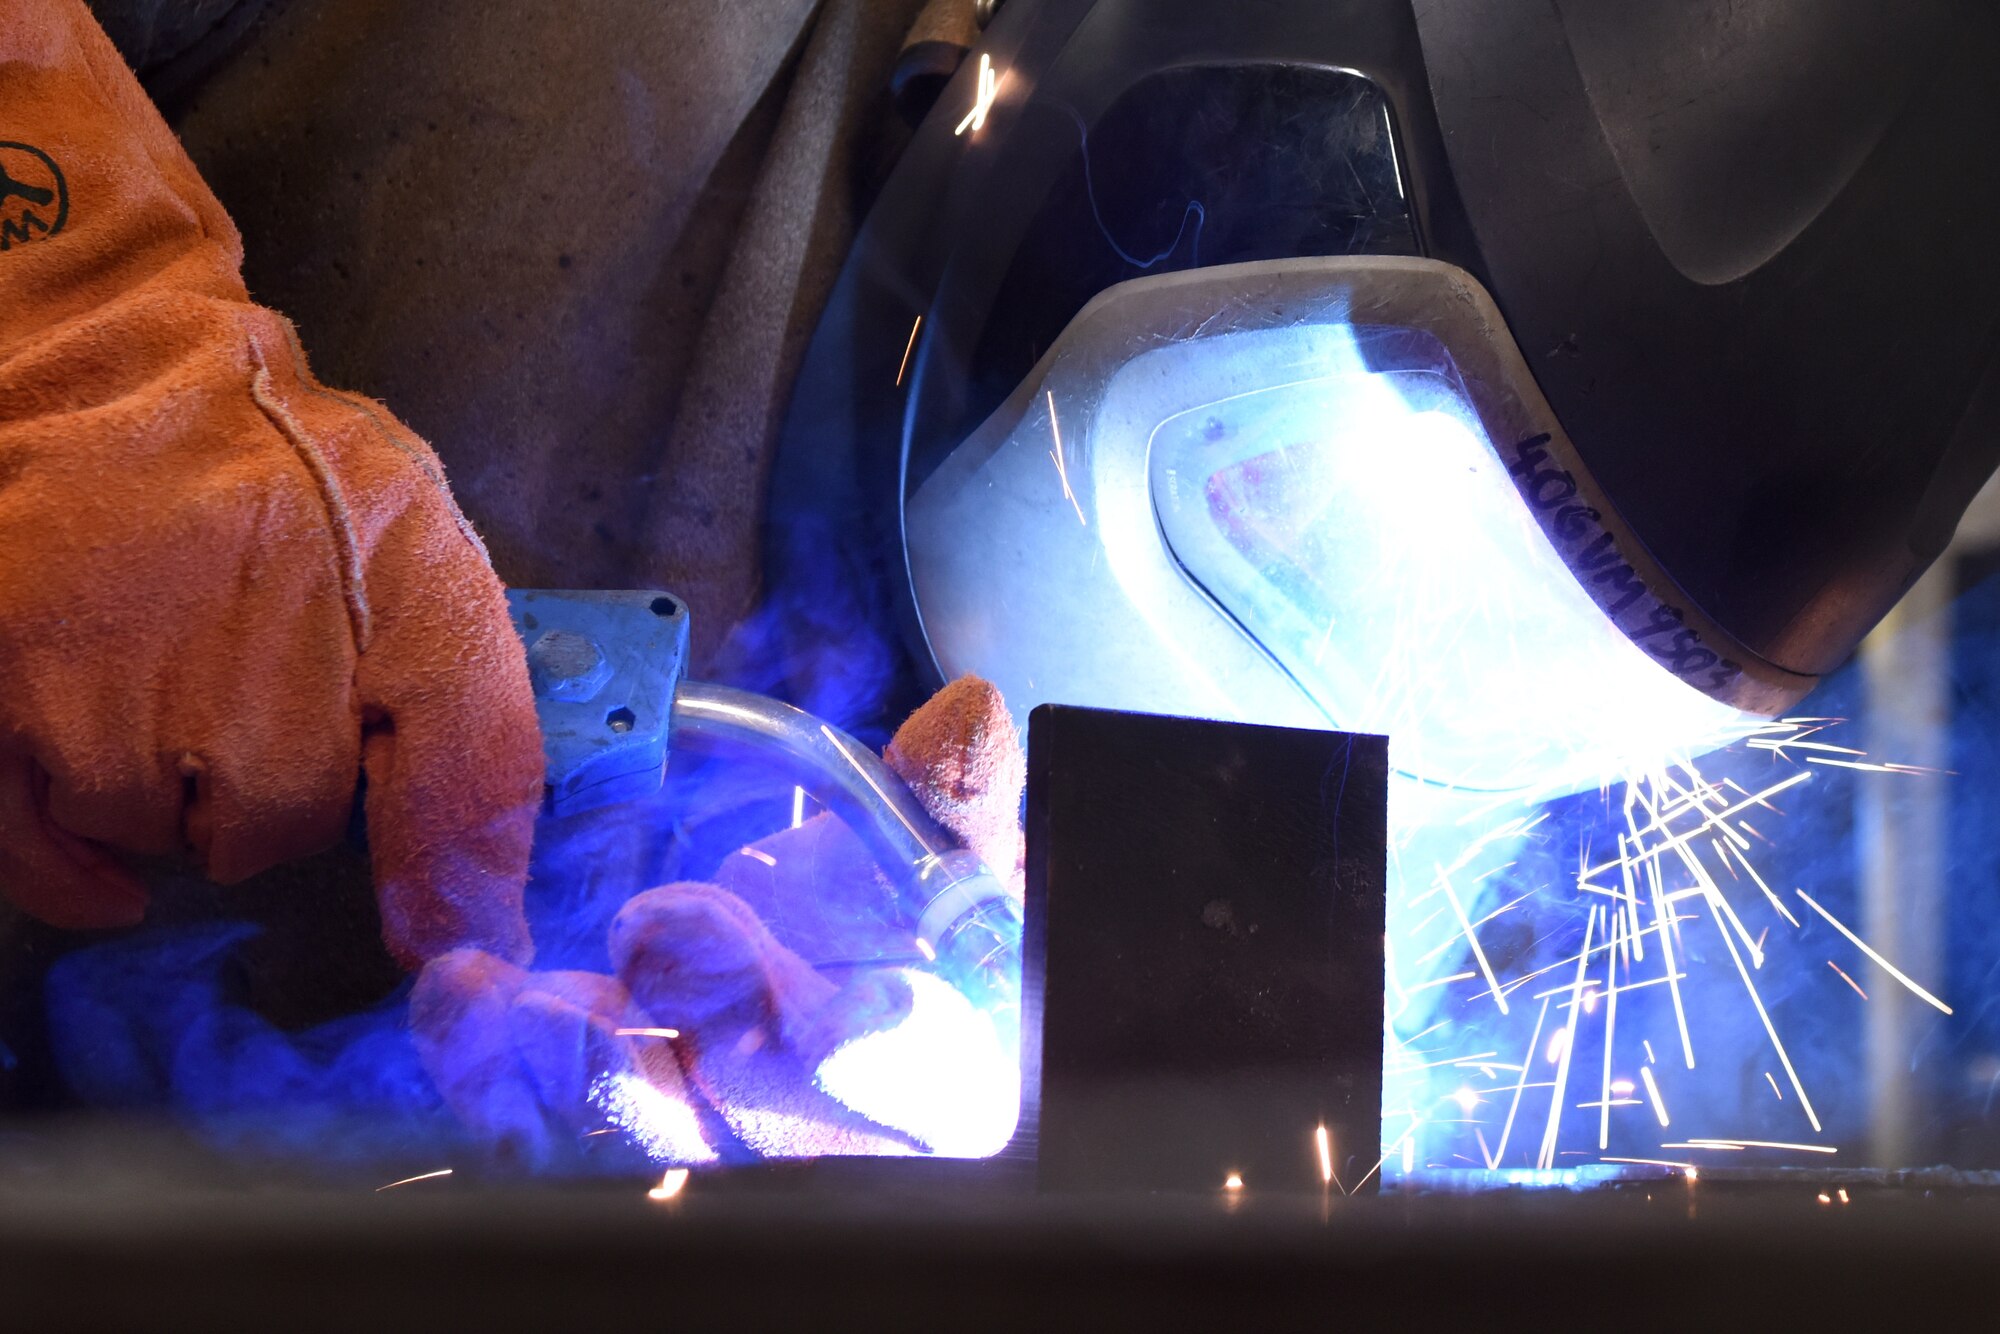 Auto body repair technician performs a metal inert gas weld